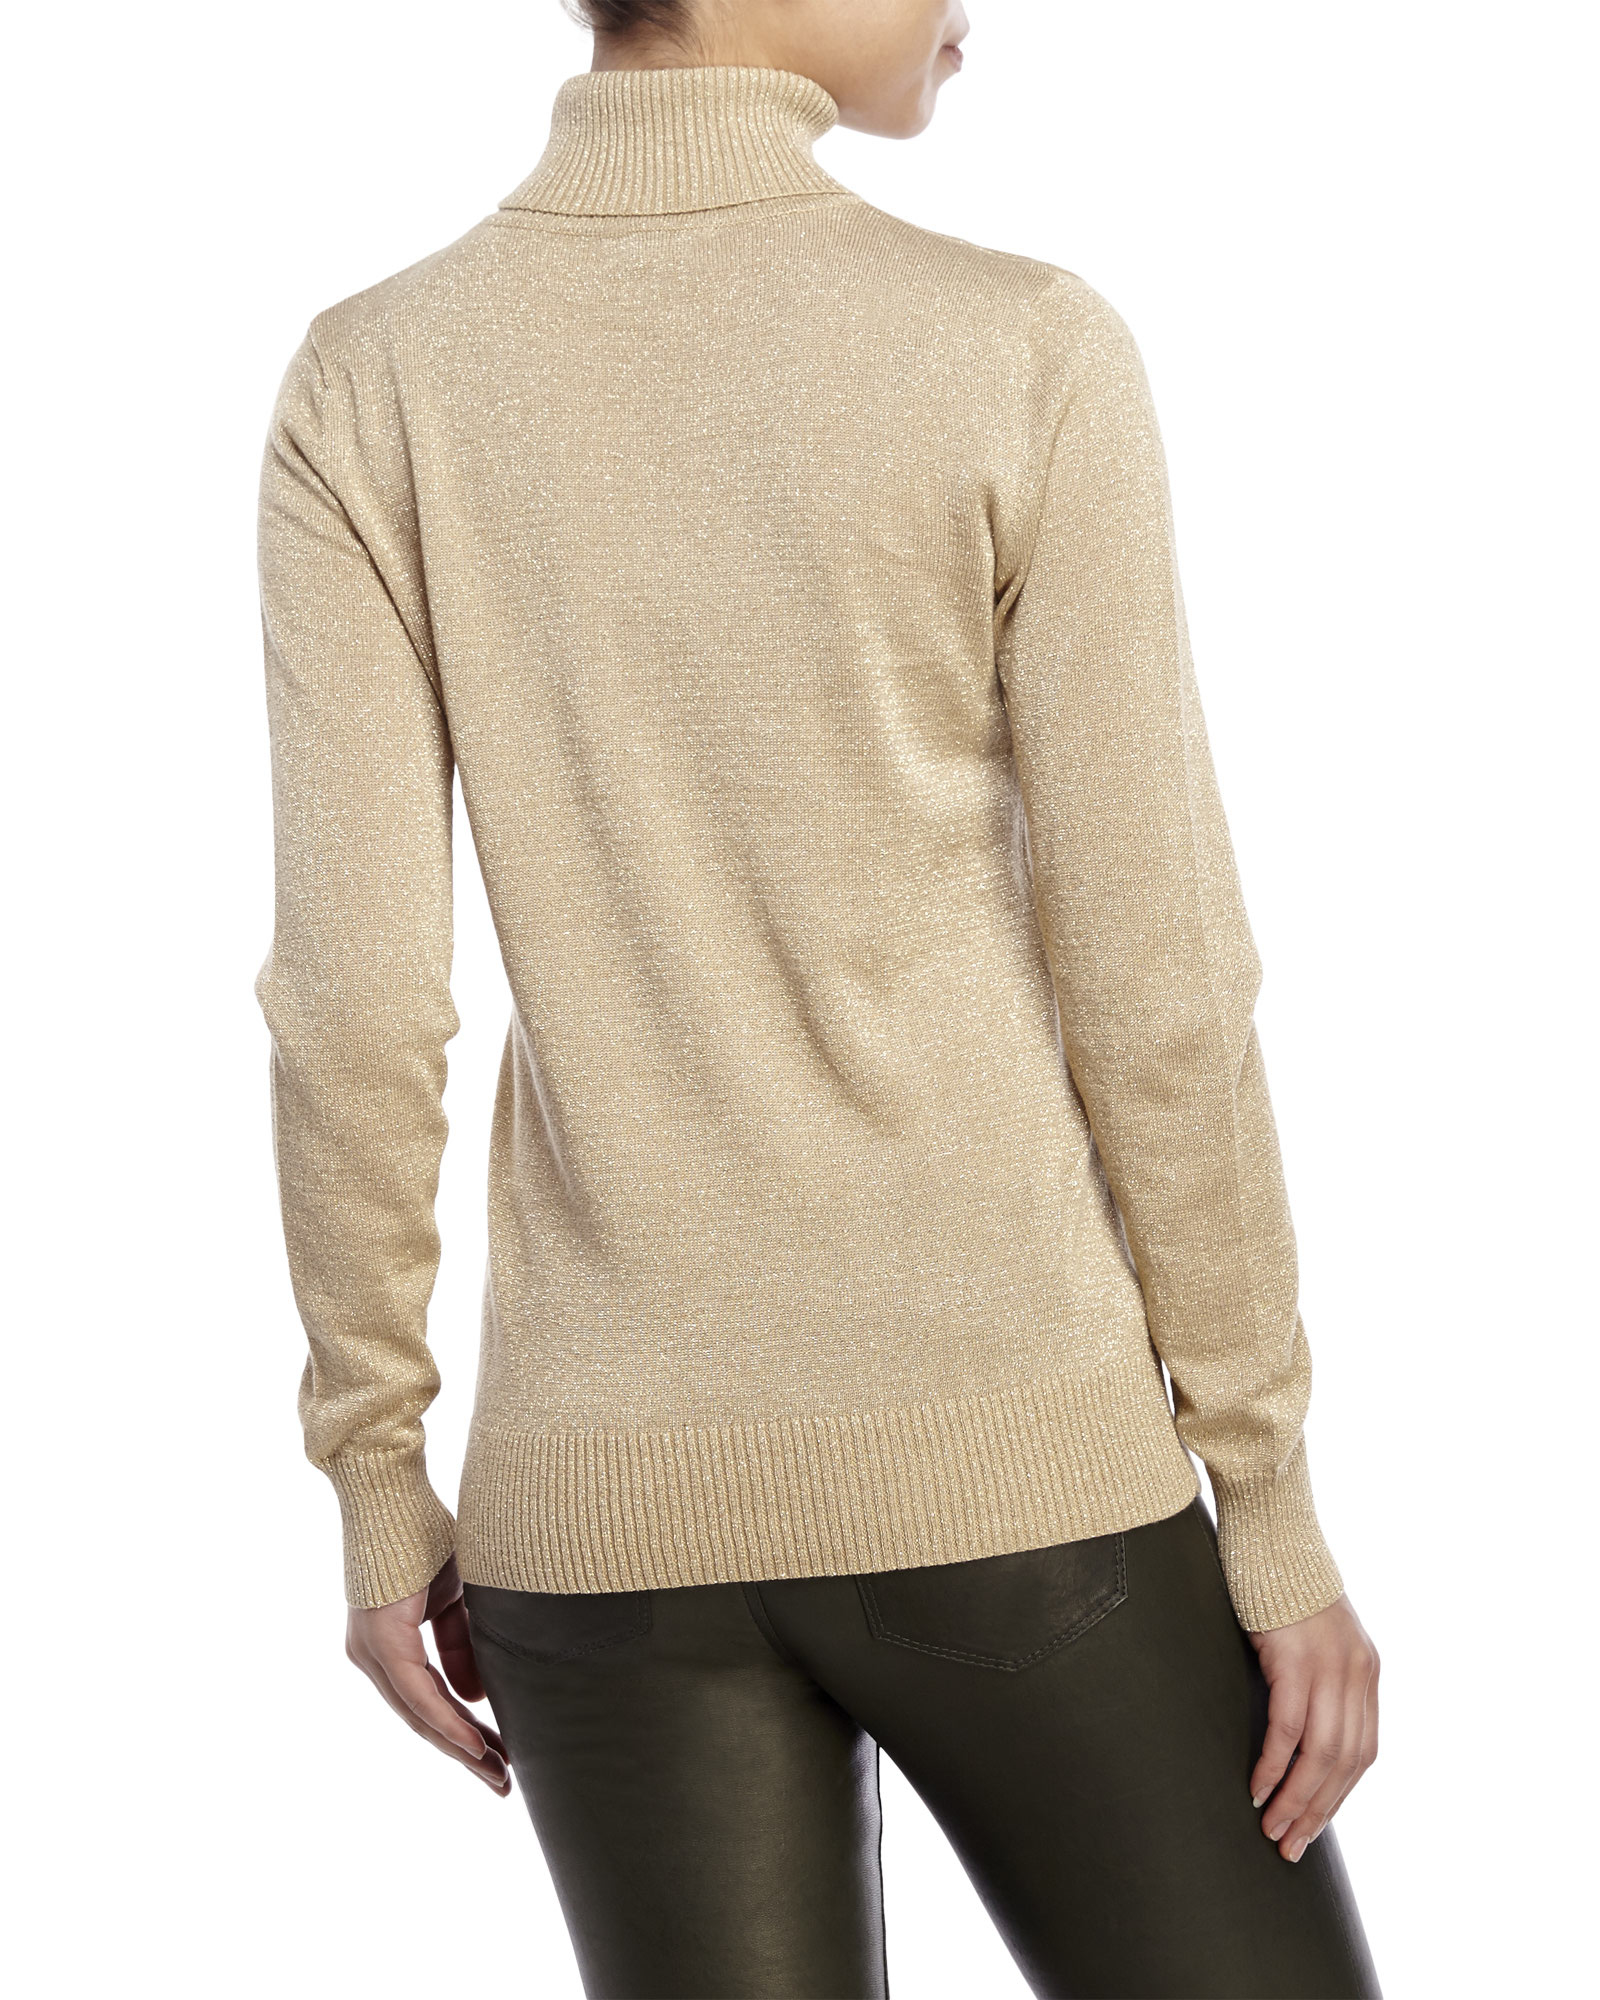 Joseph A Turtleneck Metallic Lurex Sweater in Metallic - Lyst